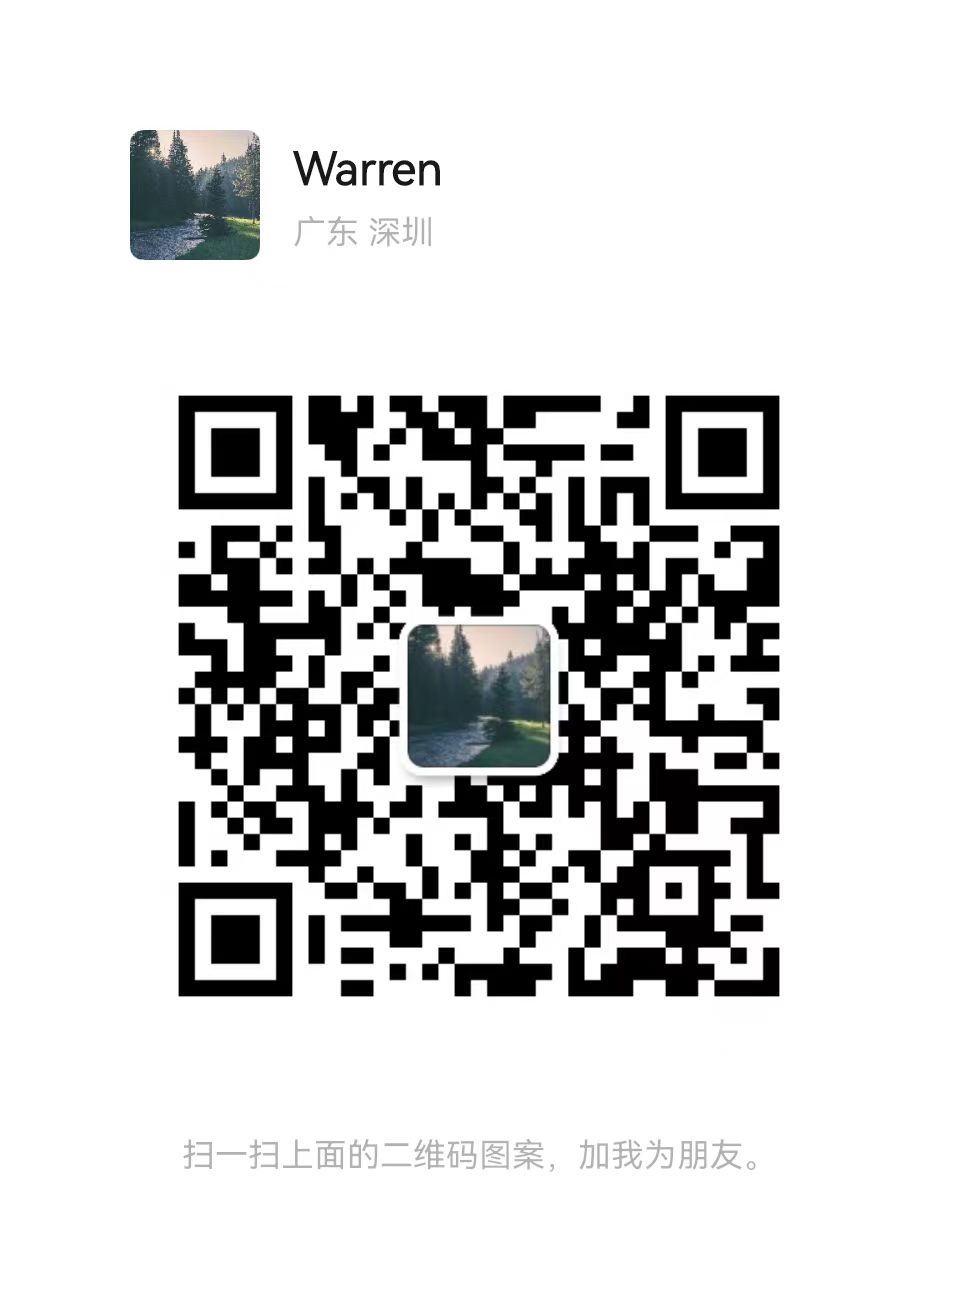 WeChat : Warren